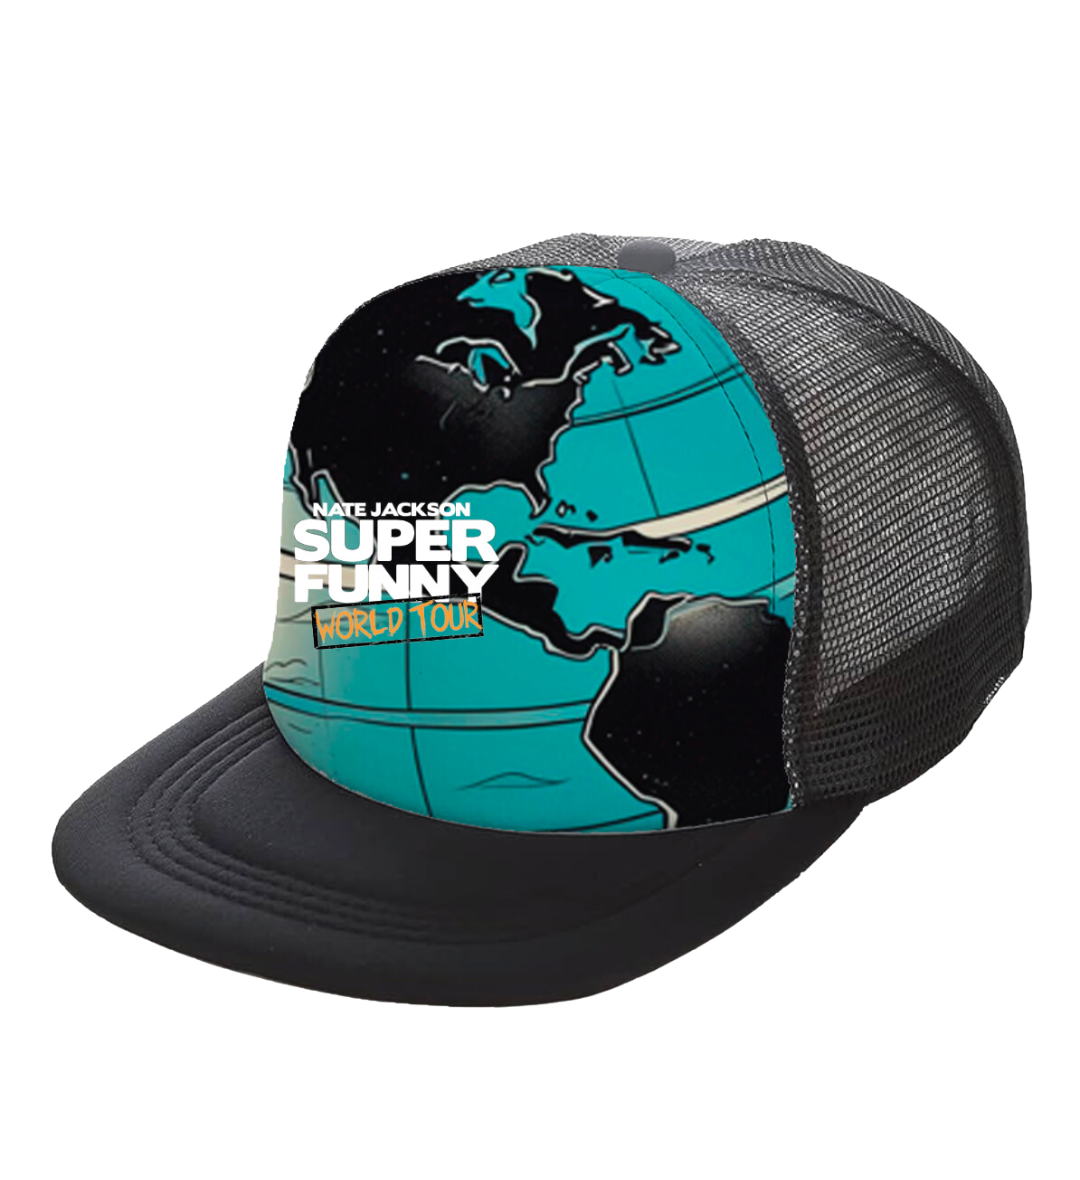 Super Funny Globe Trucker Hat